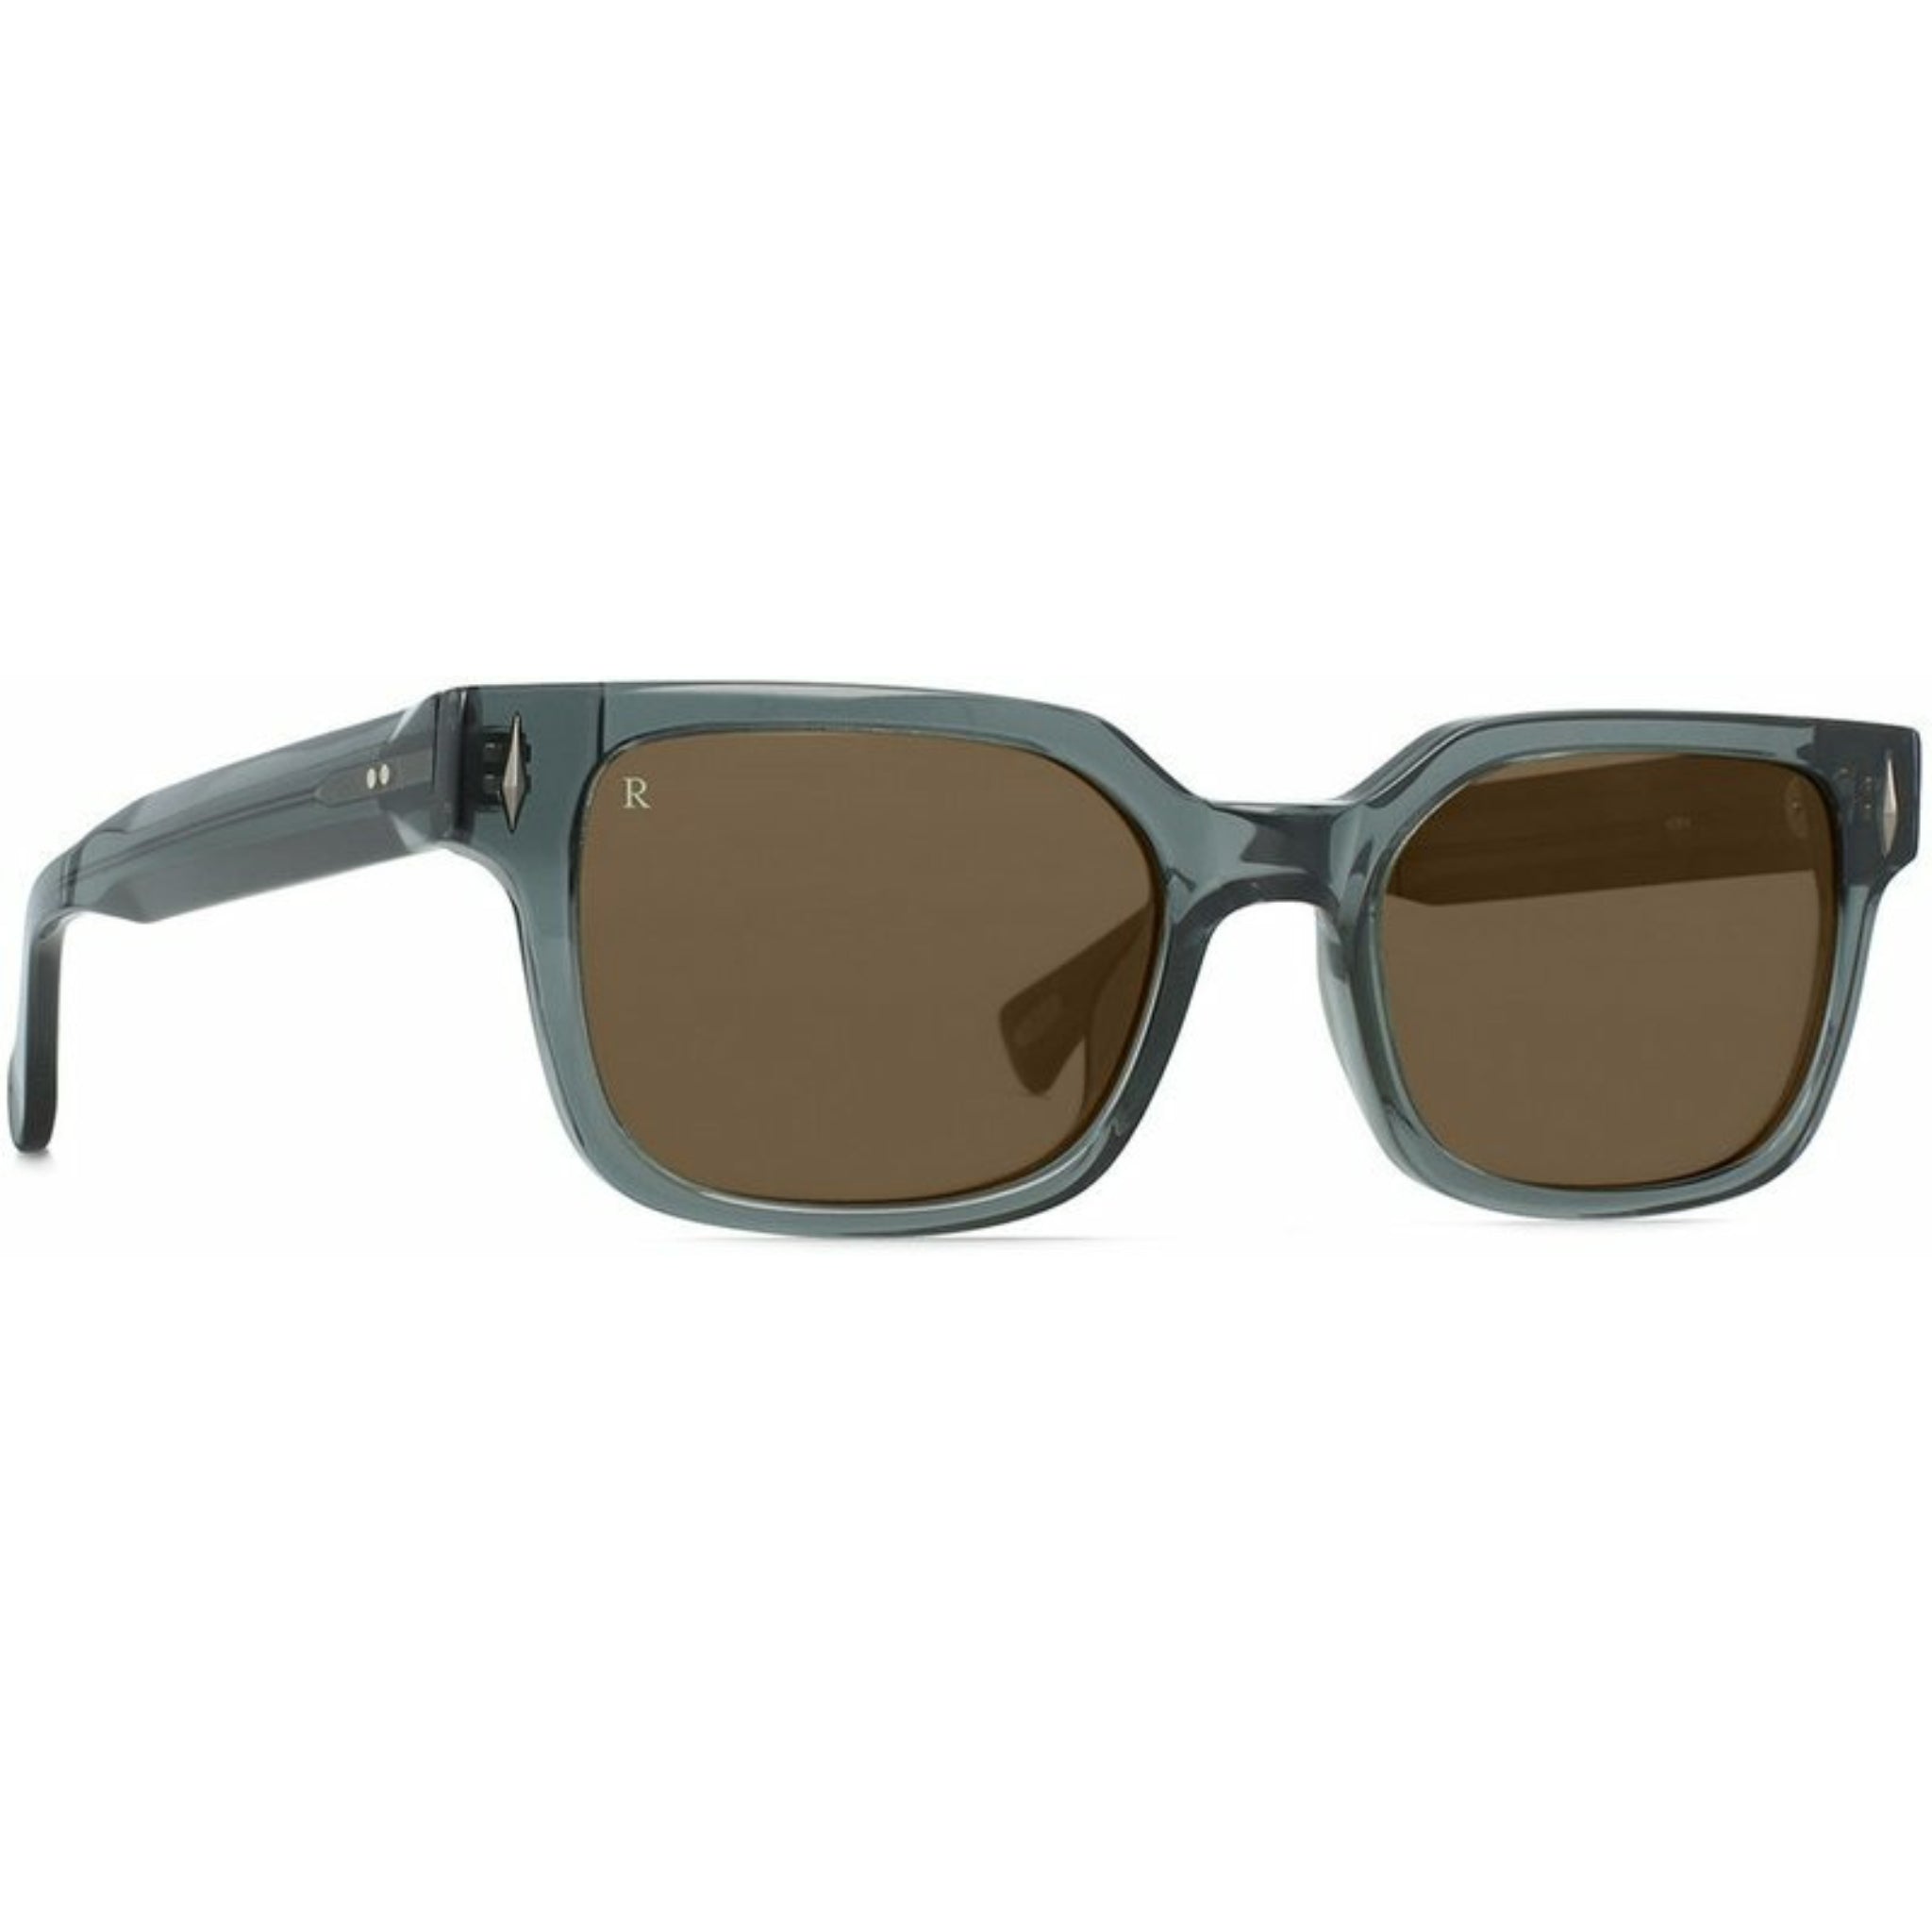 Raen Derbi Nomad Sunglasses grey Brown Polarized grey lens 54-19-145 plus  pouch | eBay